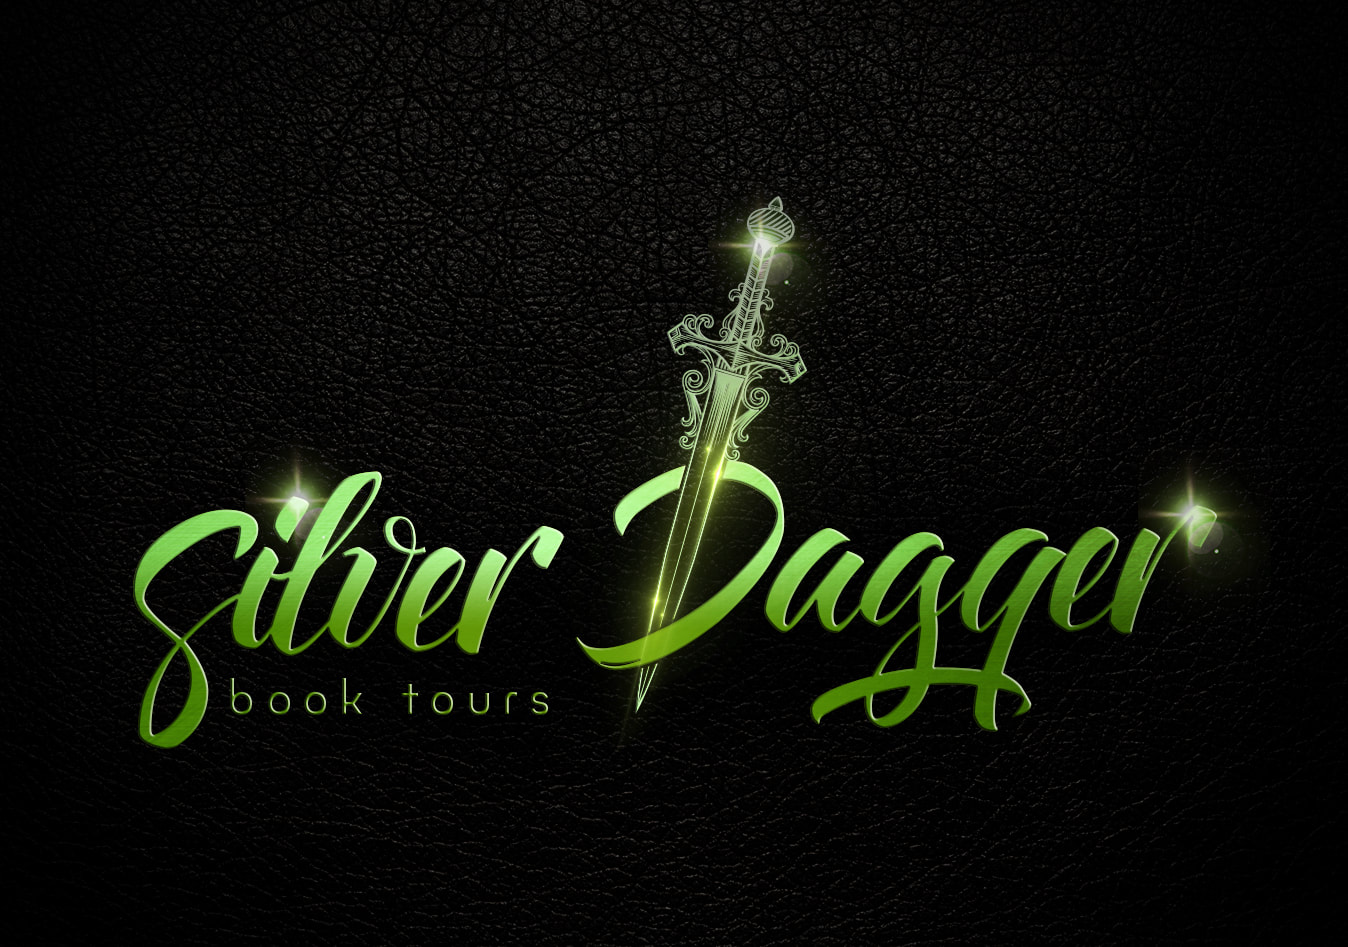 silver dagger book tours